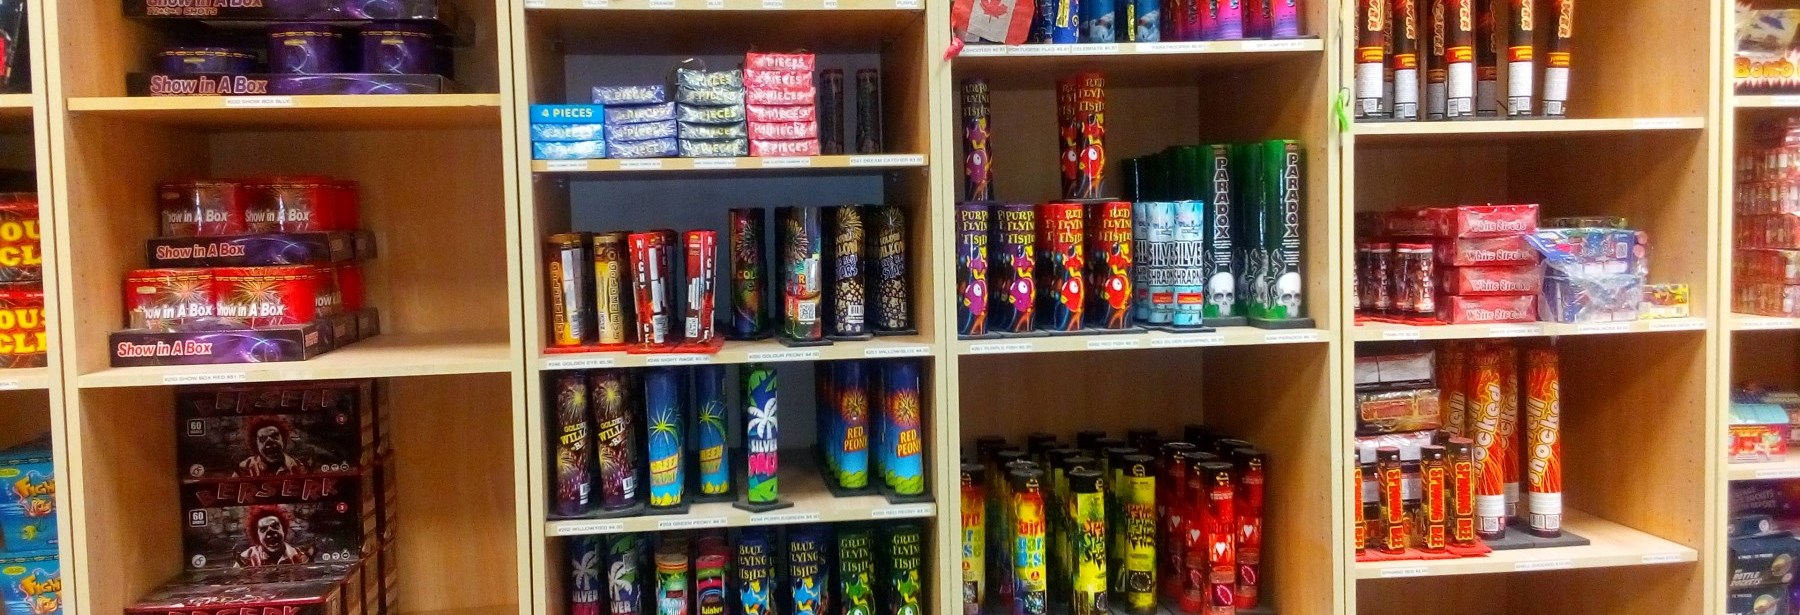 display fireworks for sale on display on shelves